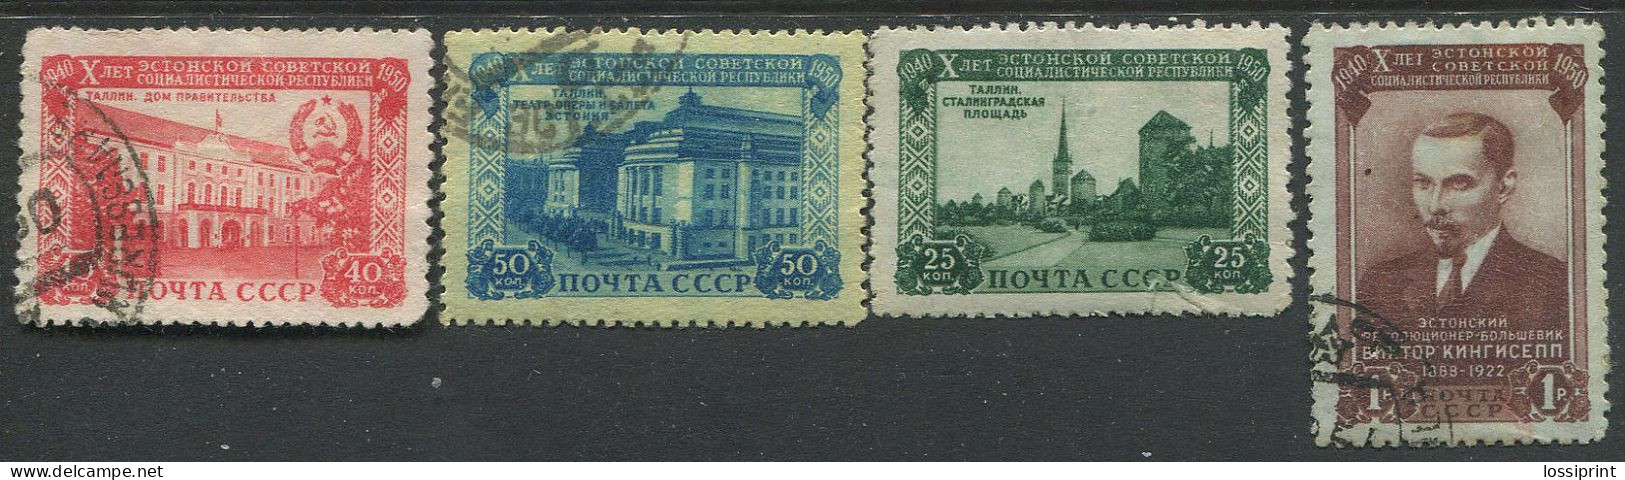 Russia:Estonia:Used Stamps Serie X Years Estonia, V.Kingissepp, Theatre, Street, 1950 - Usados